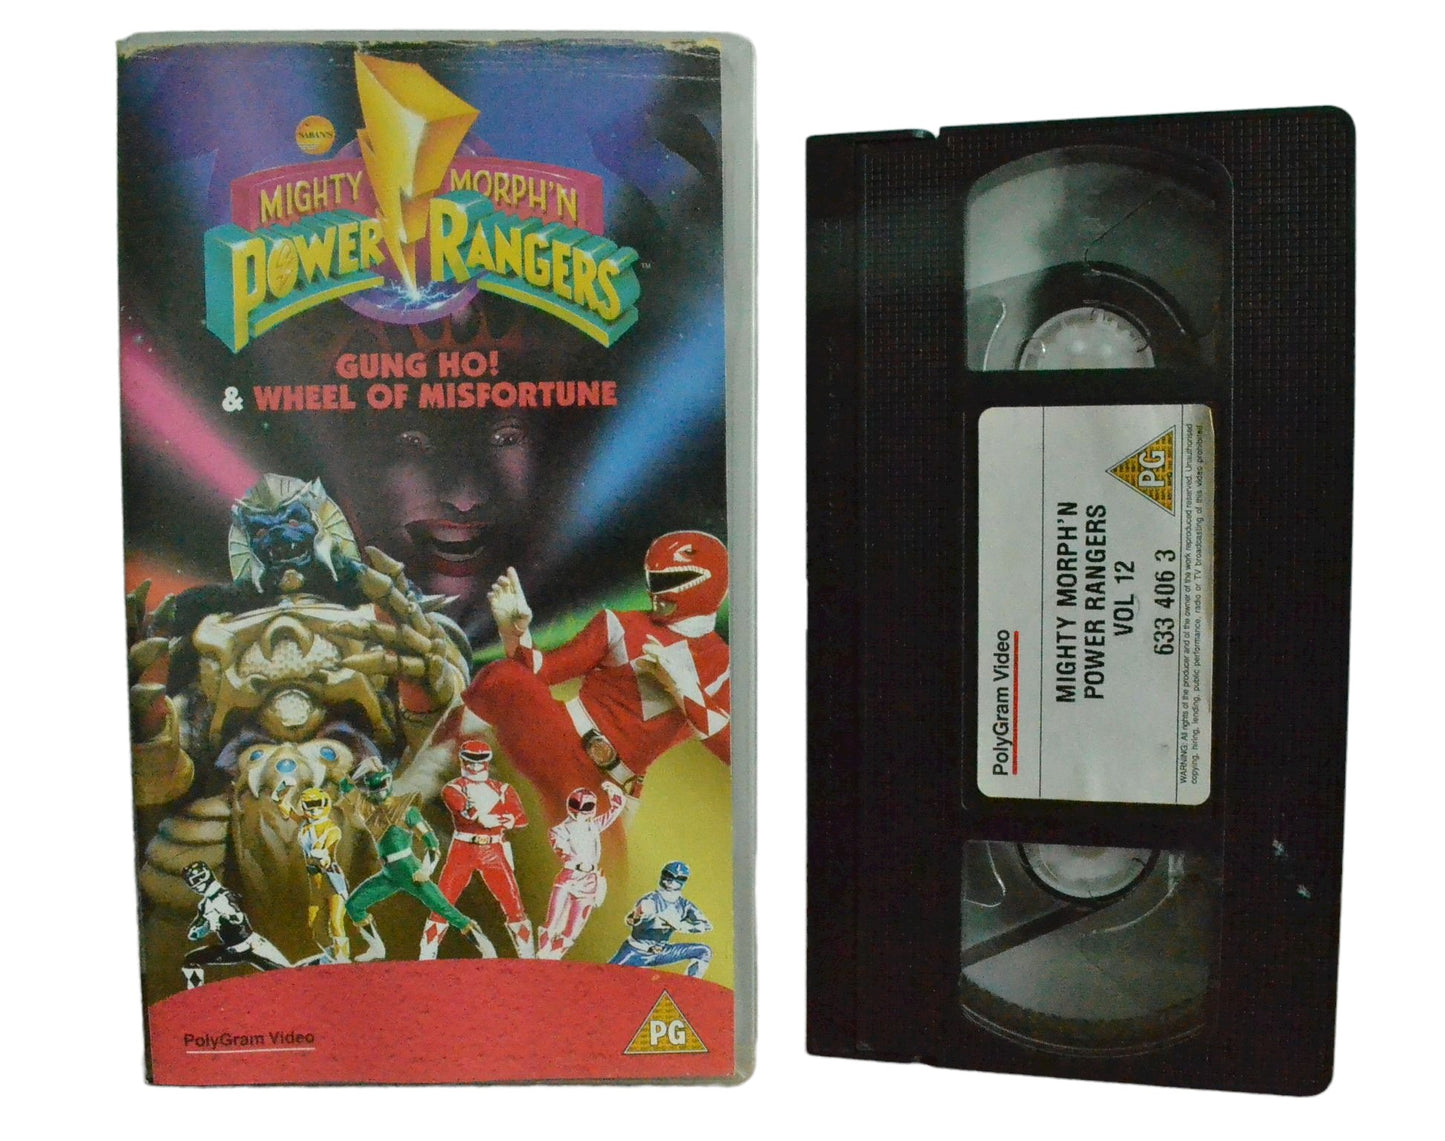 Mighty Morph 'N Power Rangers (Gung Ho! & Wheel of Misfortune) - Polygram Video - Childrens - Pal VHS-